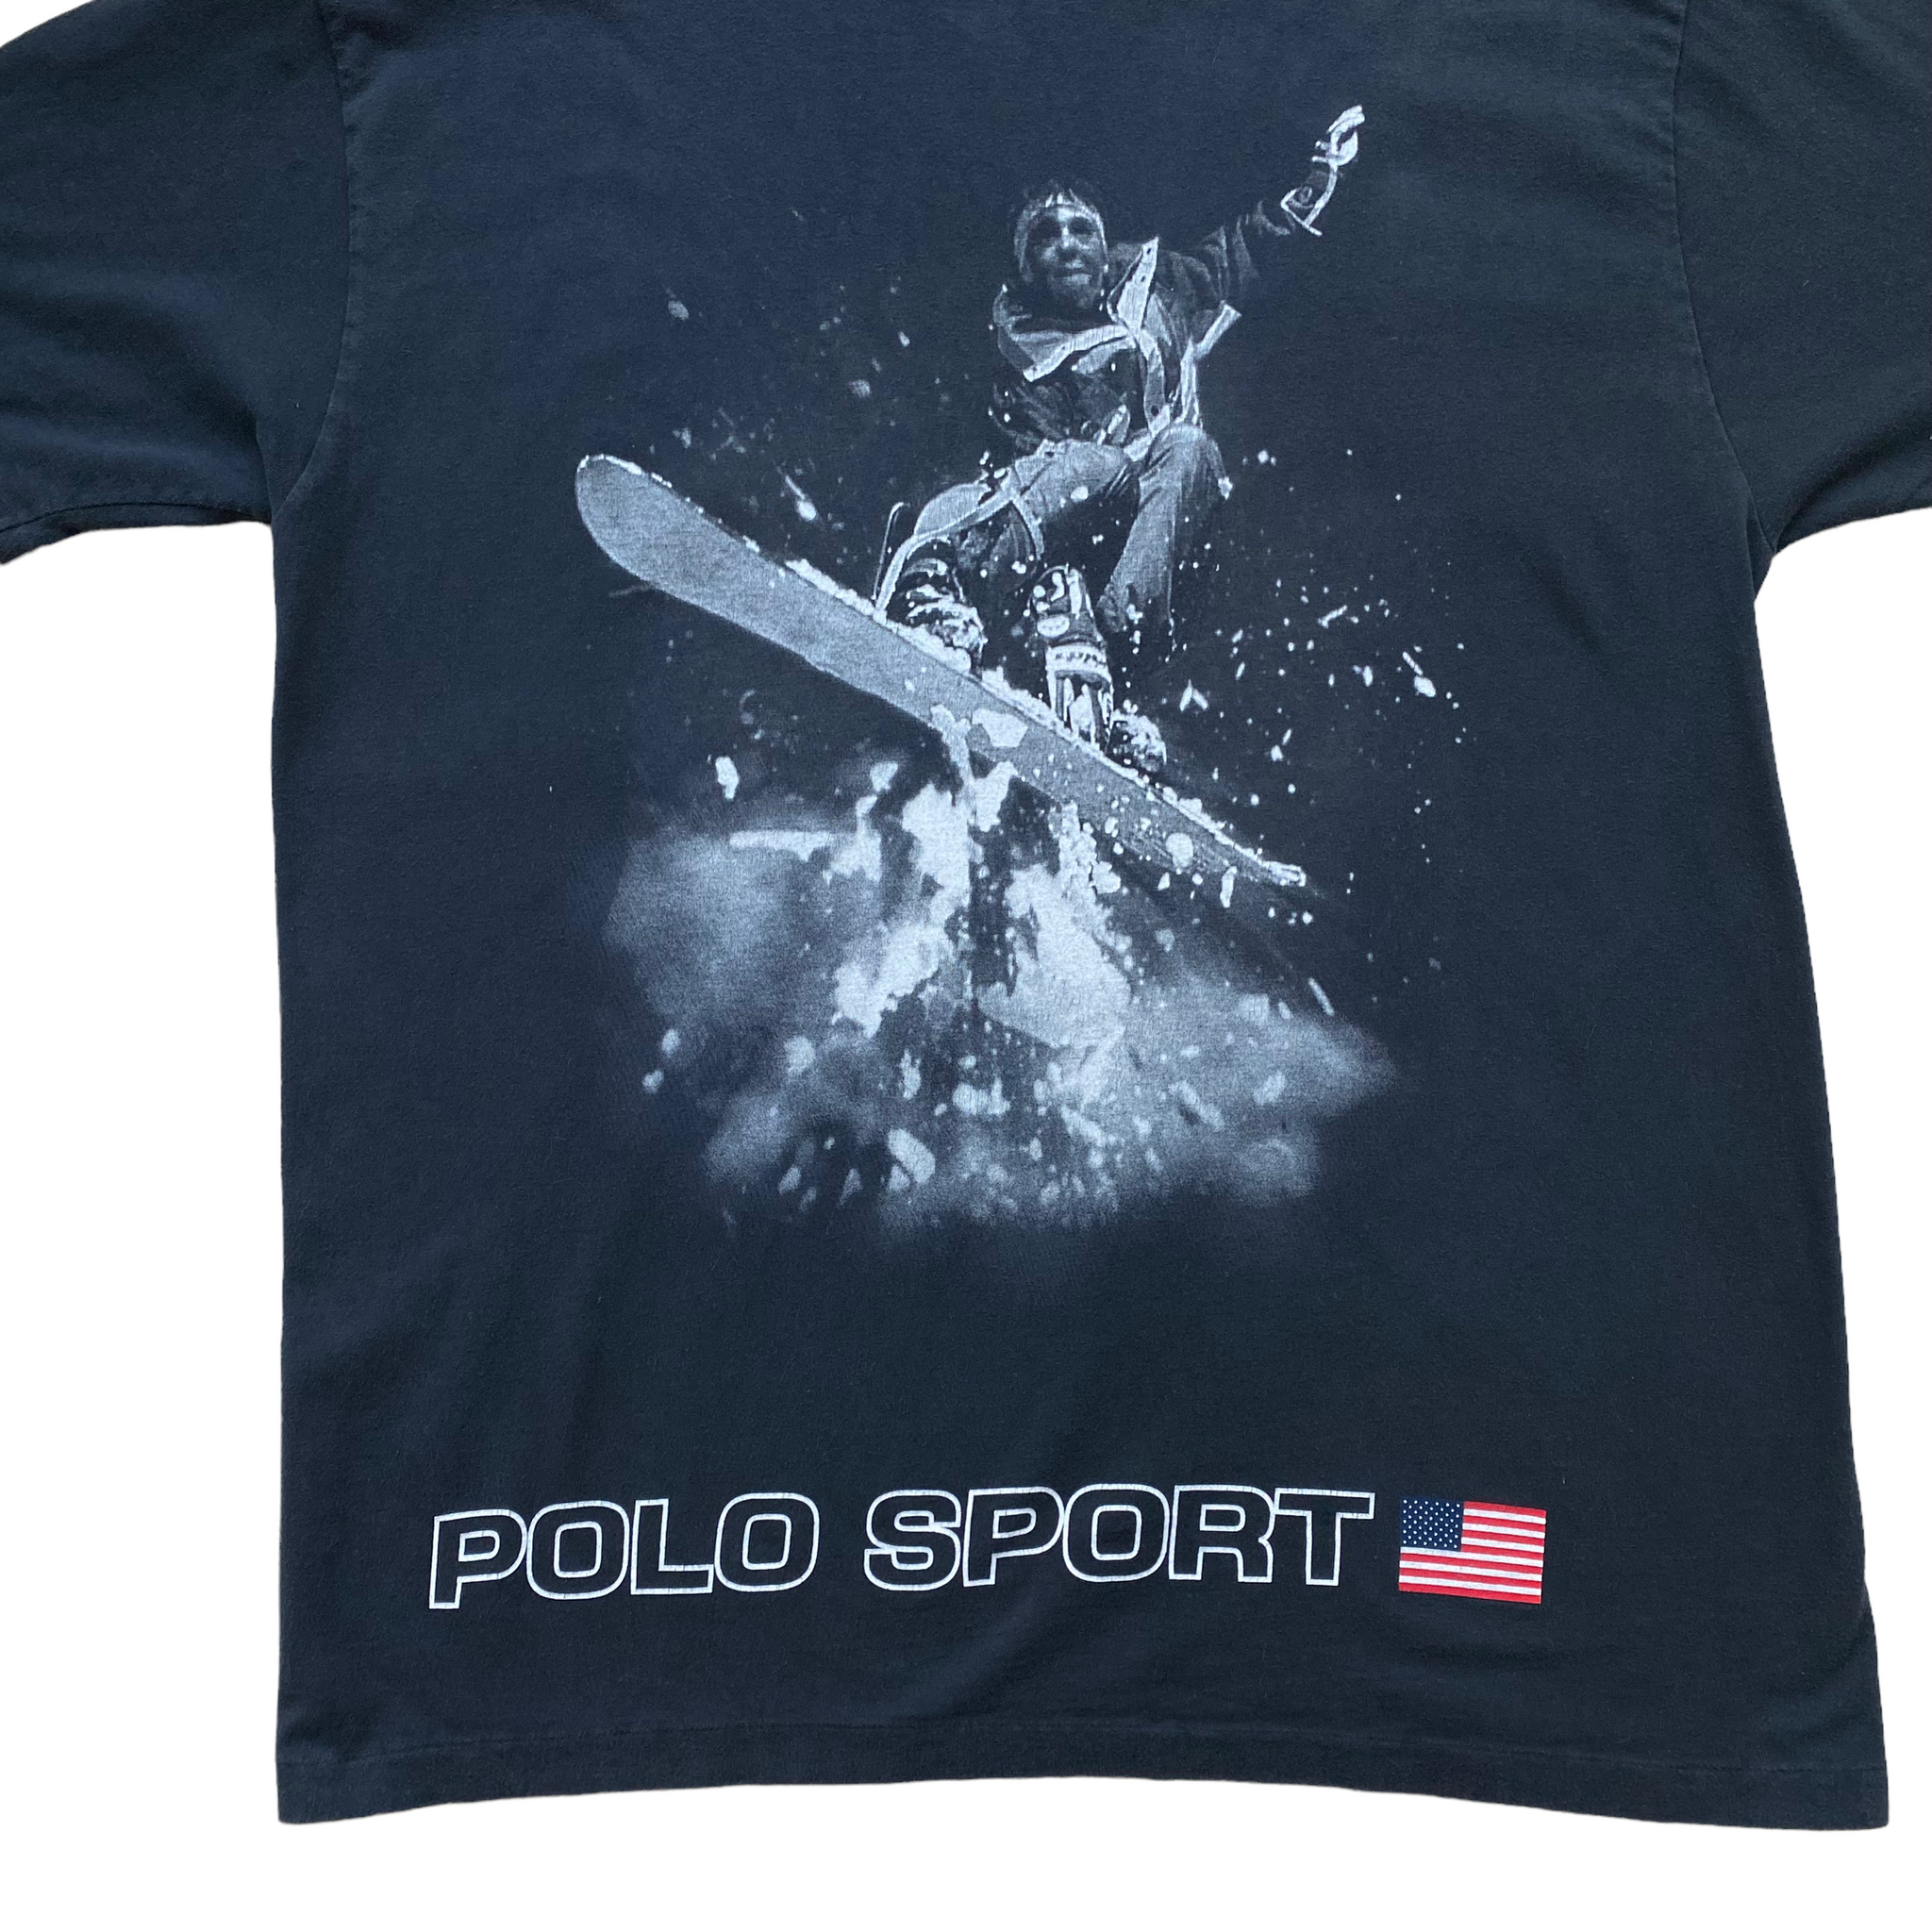 Polo sport snowboarder tee medium